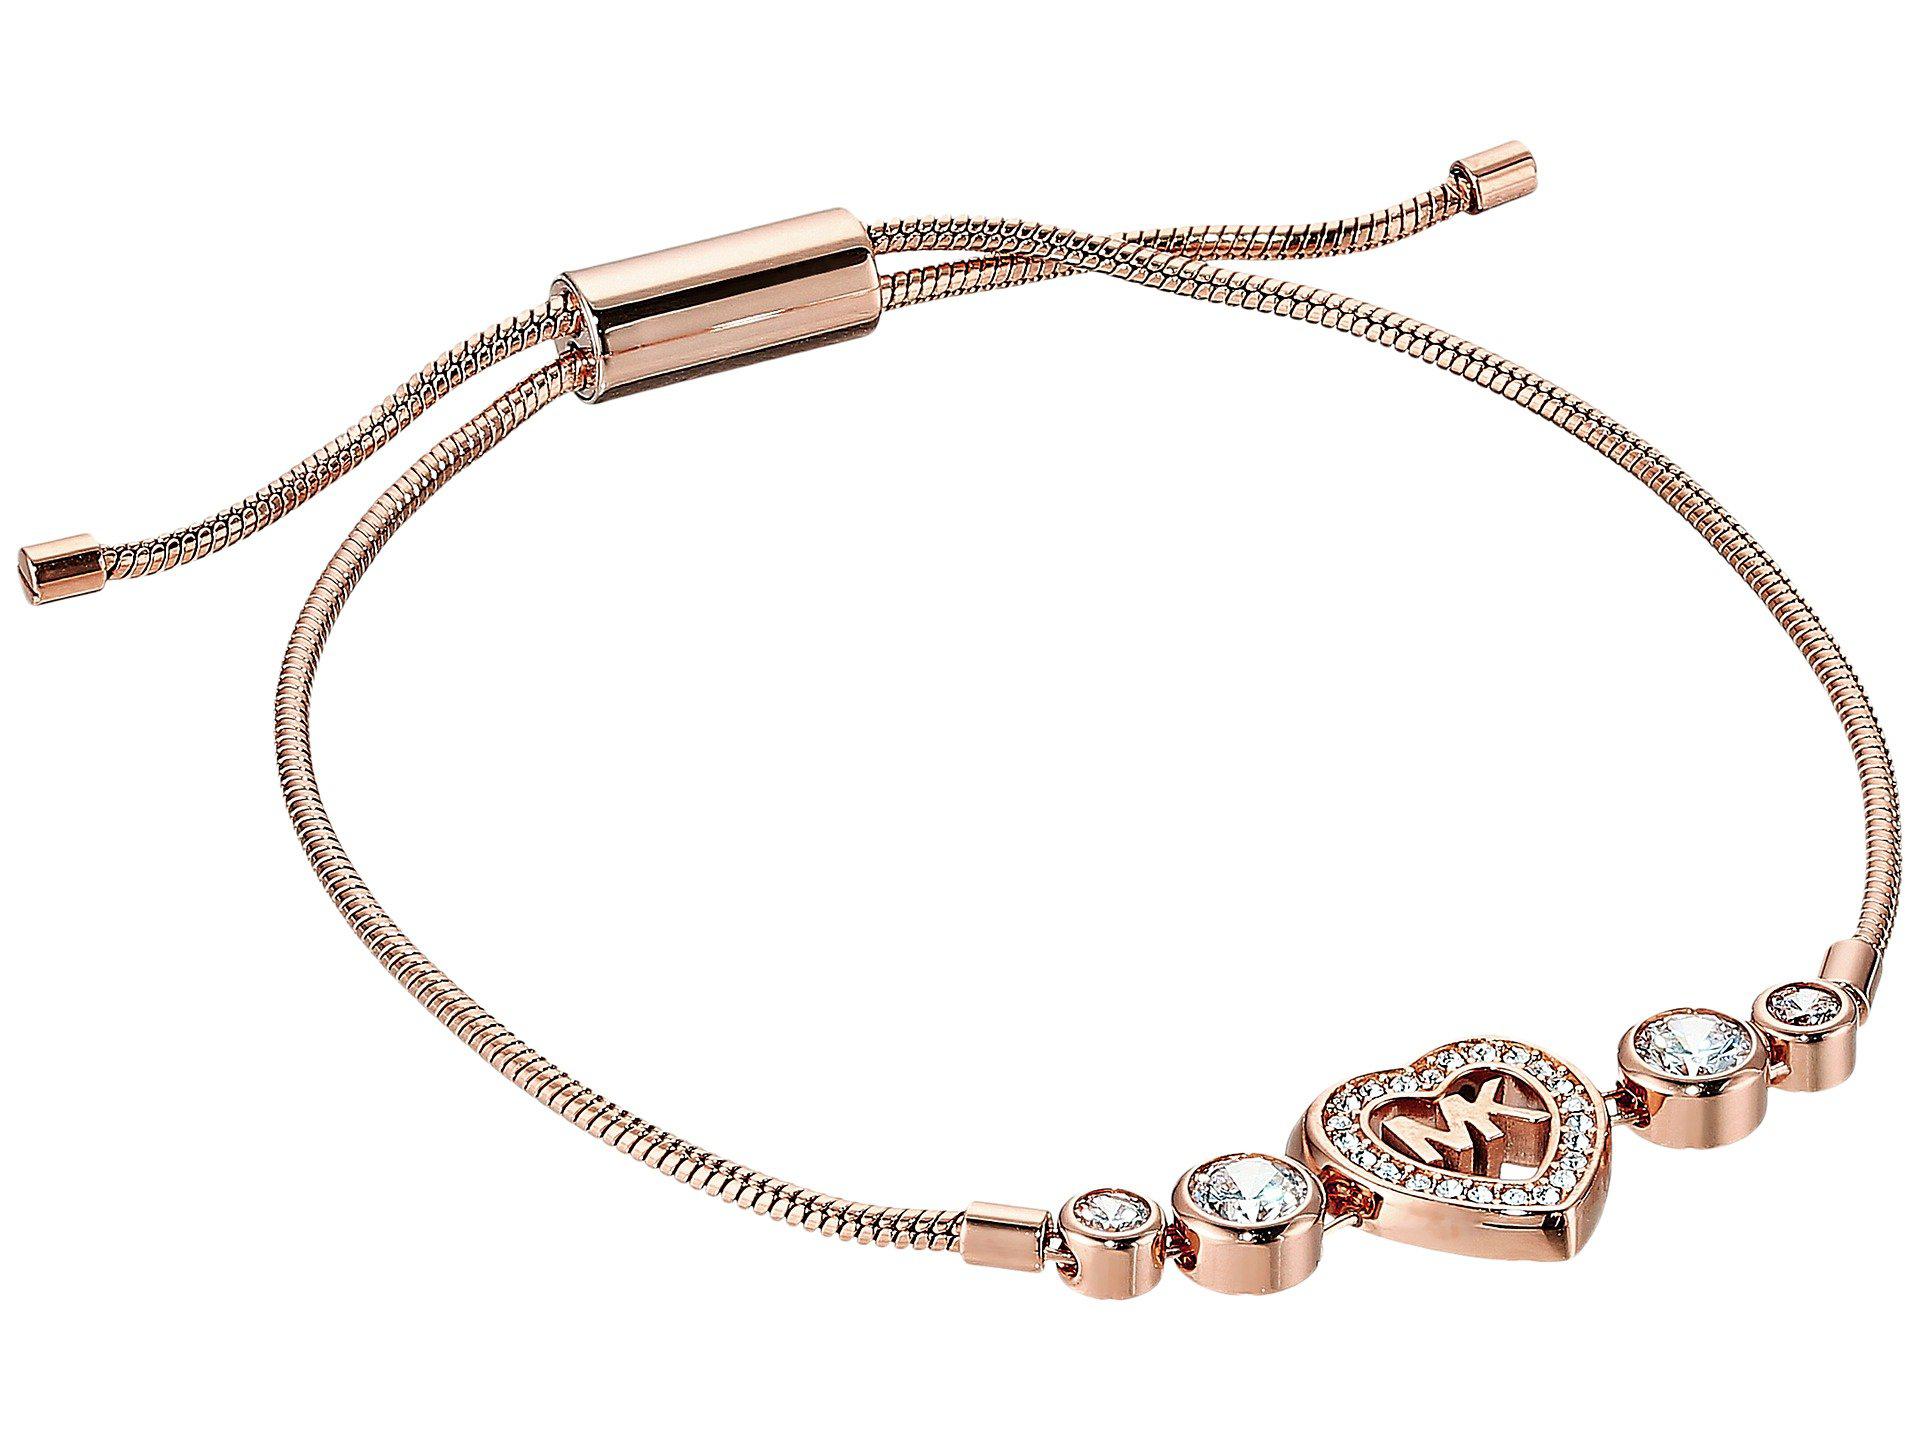 Michael Kors Limited Edition Pride 14K Rose GoldPlated Sterling Silver Bangle  Bracelet  MKC1576AY791  Watch Station